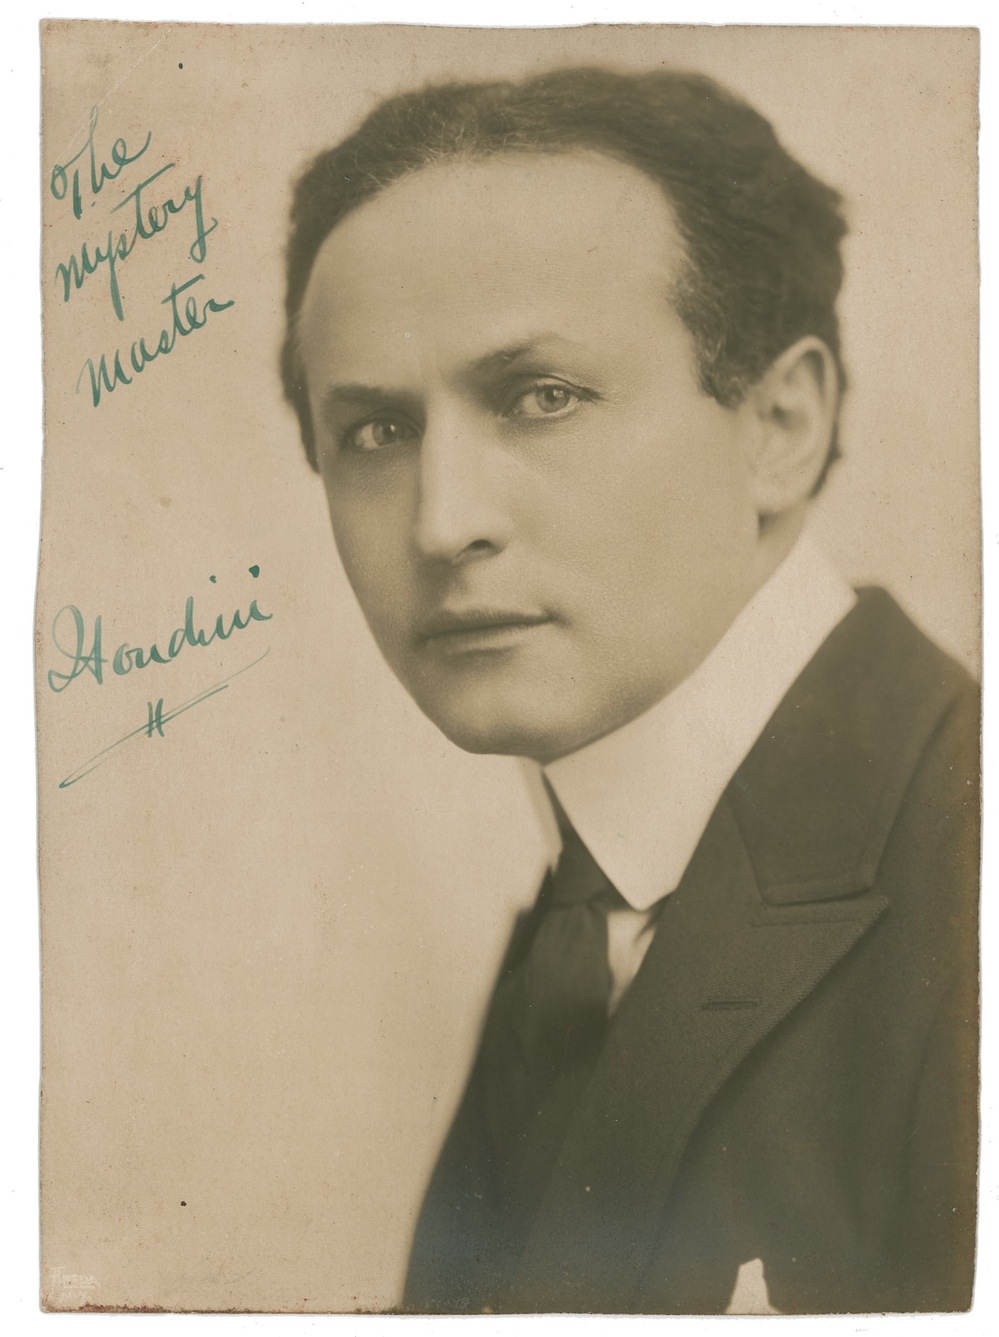 Lot #1046 Harry Houdini